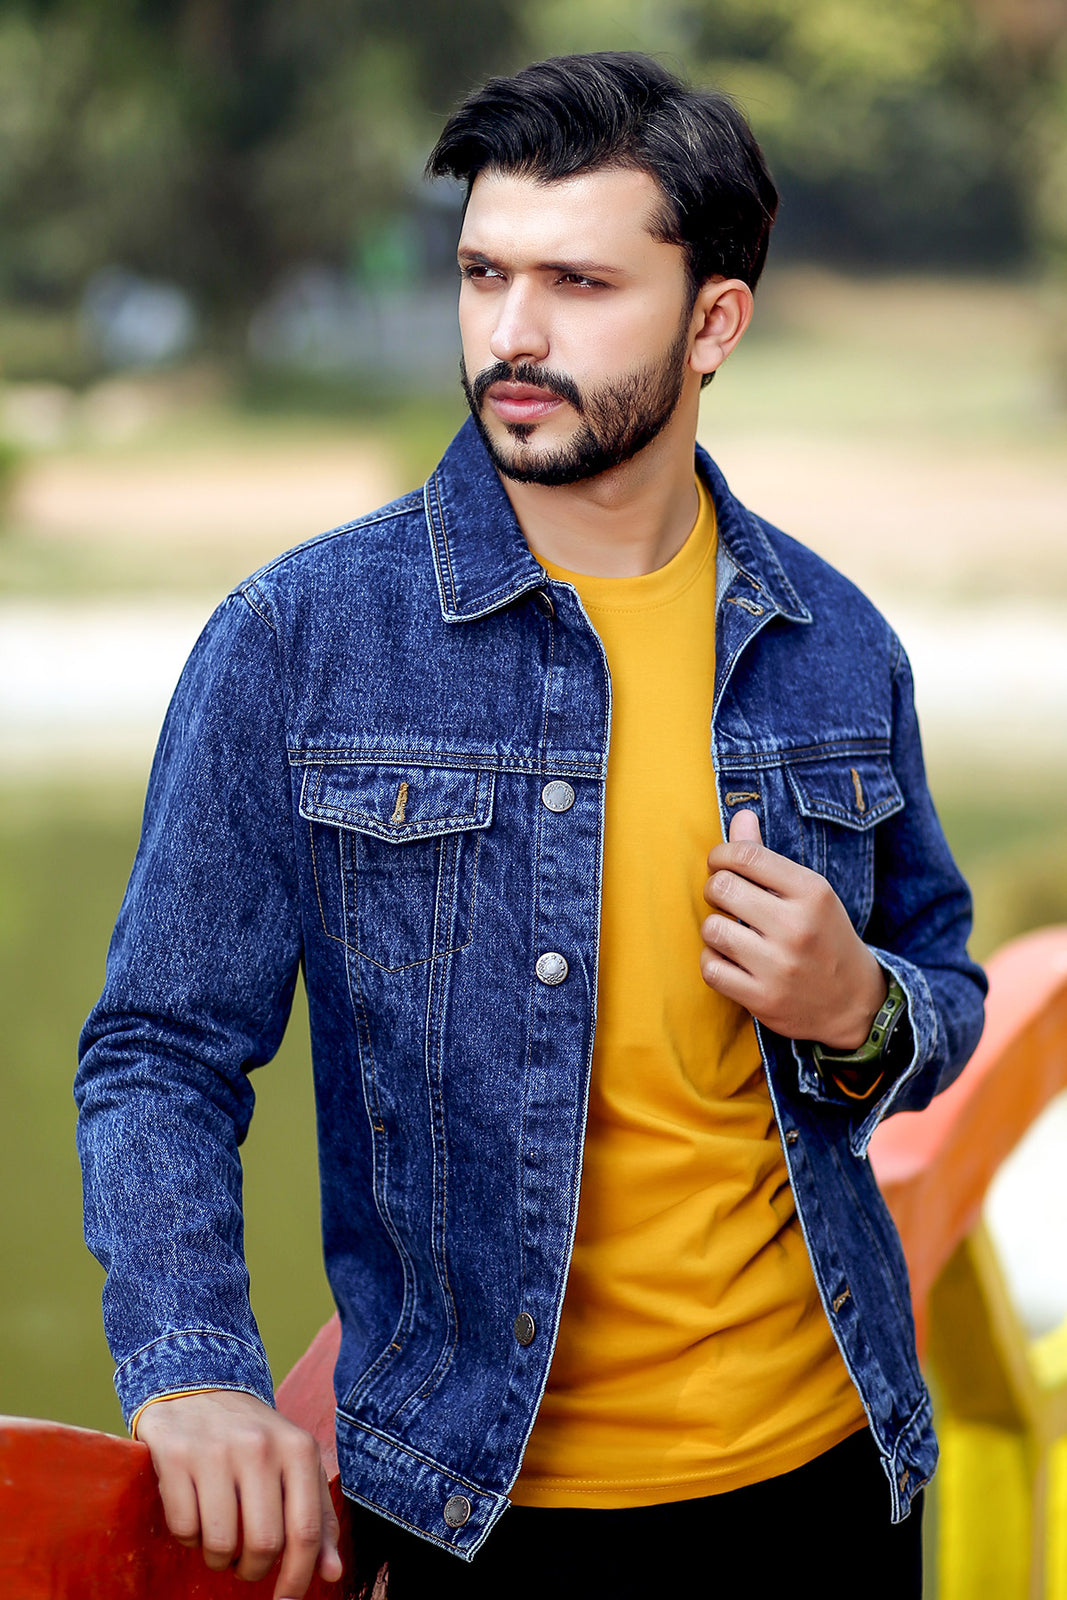  Men's Denim Jackets - Yellows / Men's Denim Jackets